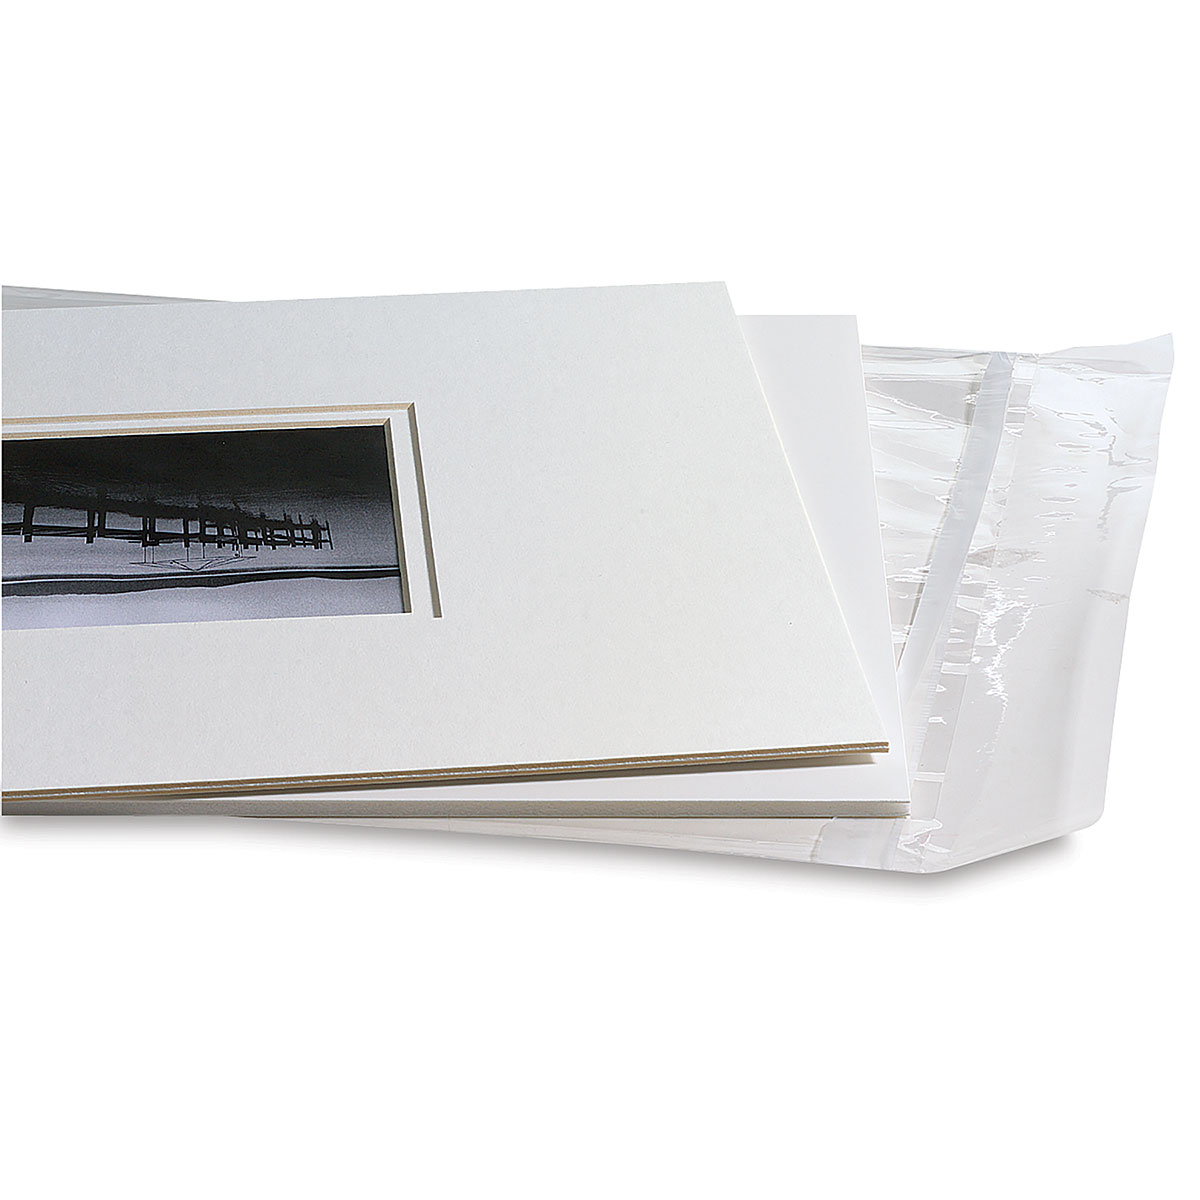 24x300 acid free archival glassine paper rolls, interleaf paper  rolls,Glassine Interleaving Paper